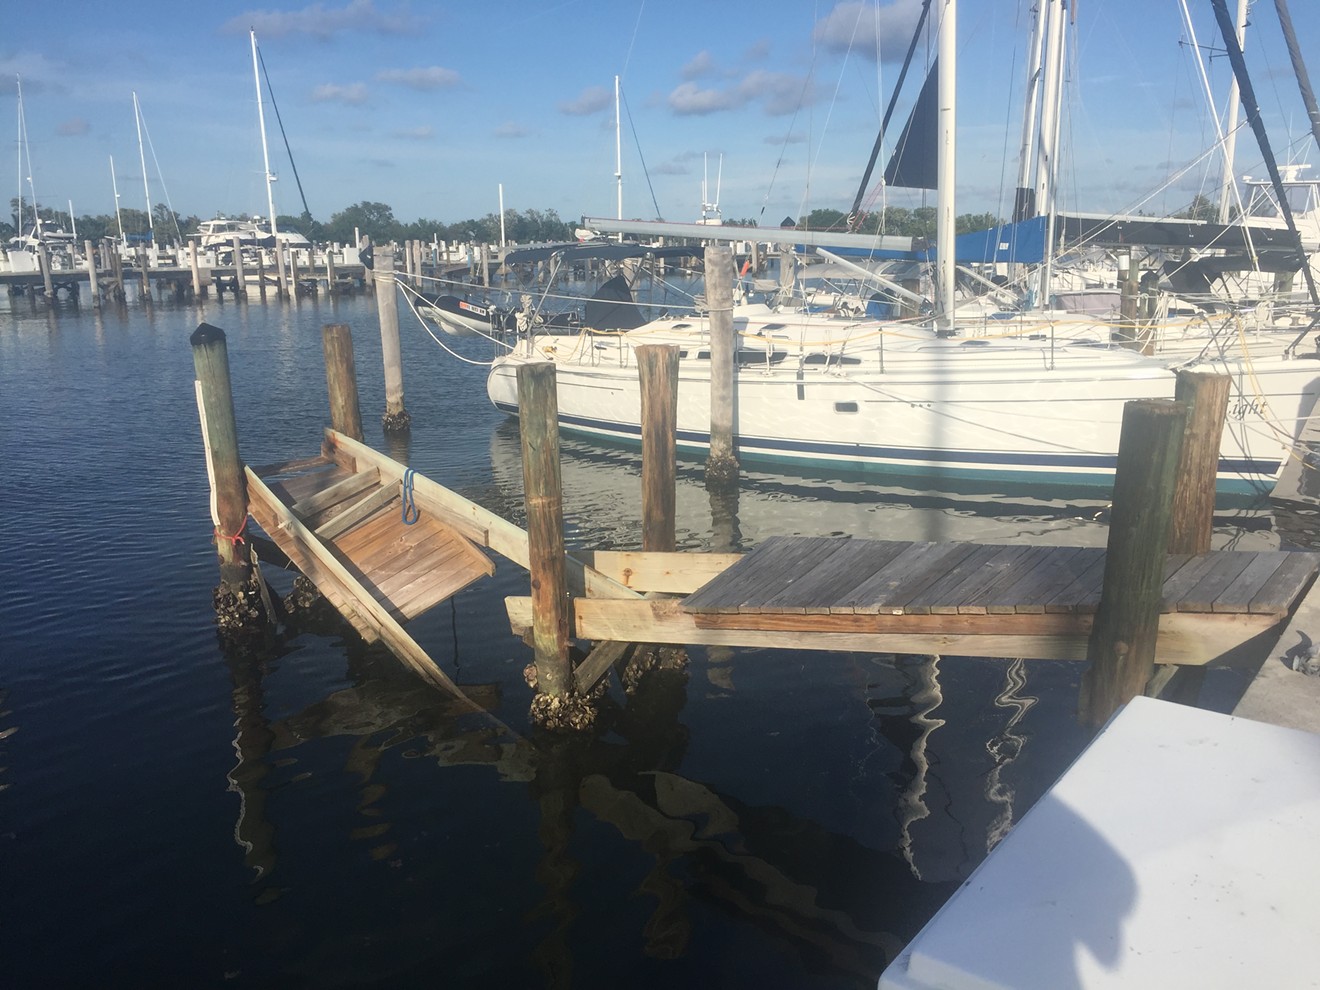 One of many docks in Dinner Key Marina that are still broken after Irma.